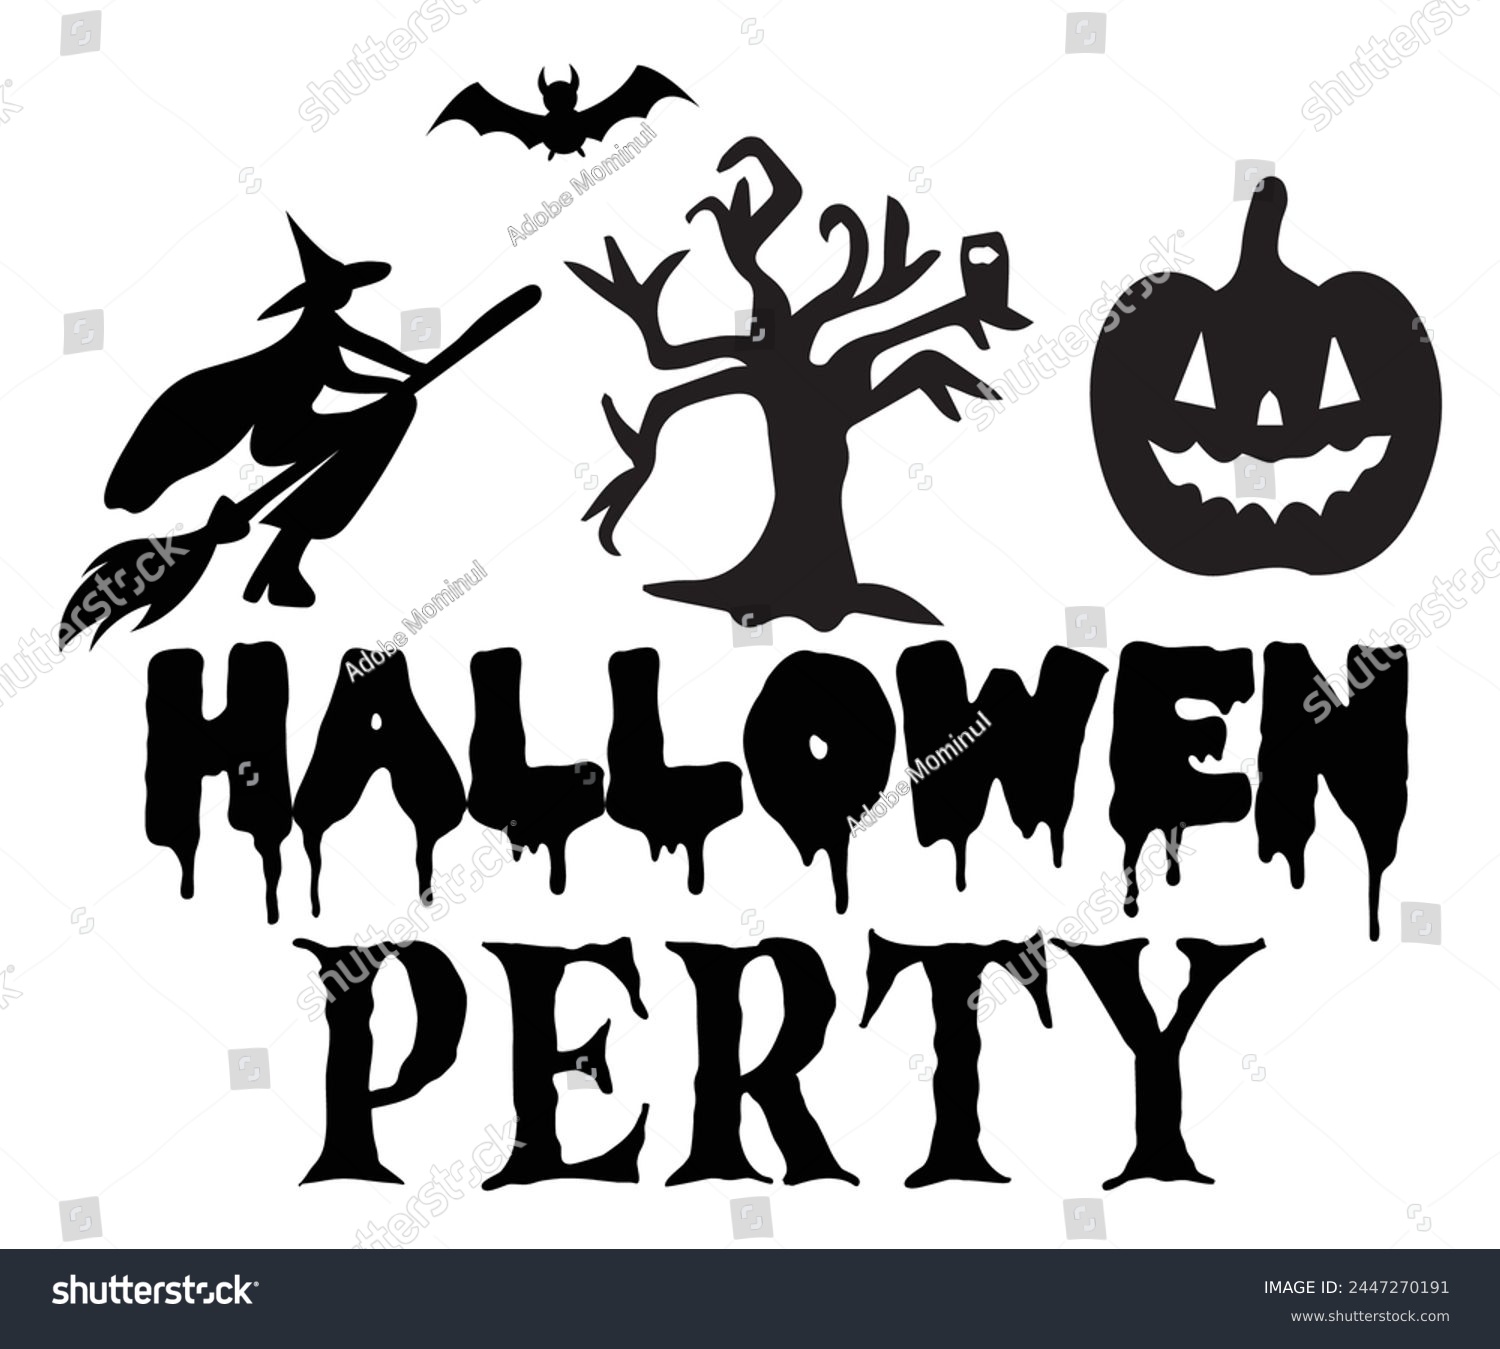 SVG of Hallowen Perty Svg,Halloween Svg,Typography,Halloween Quotes,Witches Svg,Halloween Party,Halloween Costume,Halloween Gift,Funny Halloween,Spooky Svg,Funny T shirt,Ghost Svg,Cut file svg